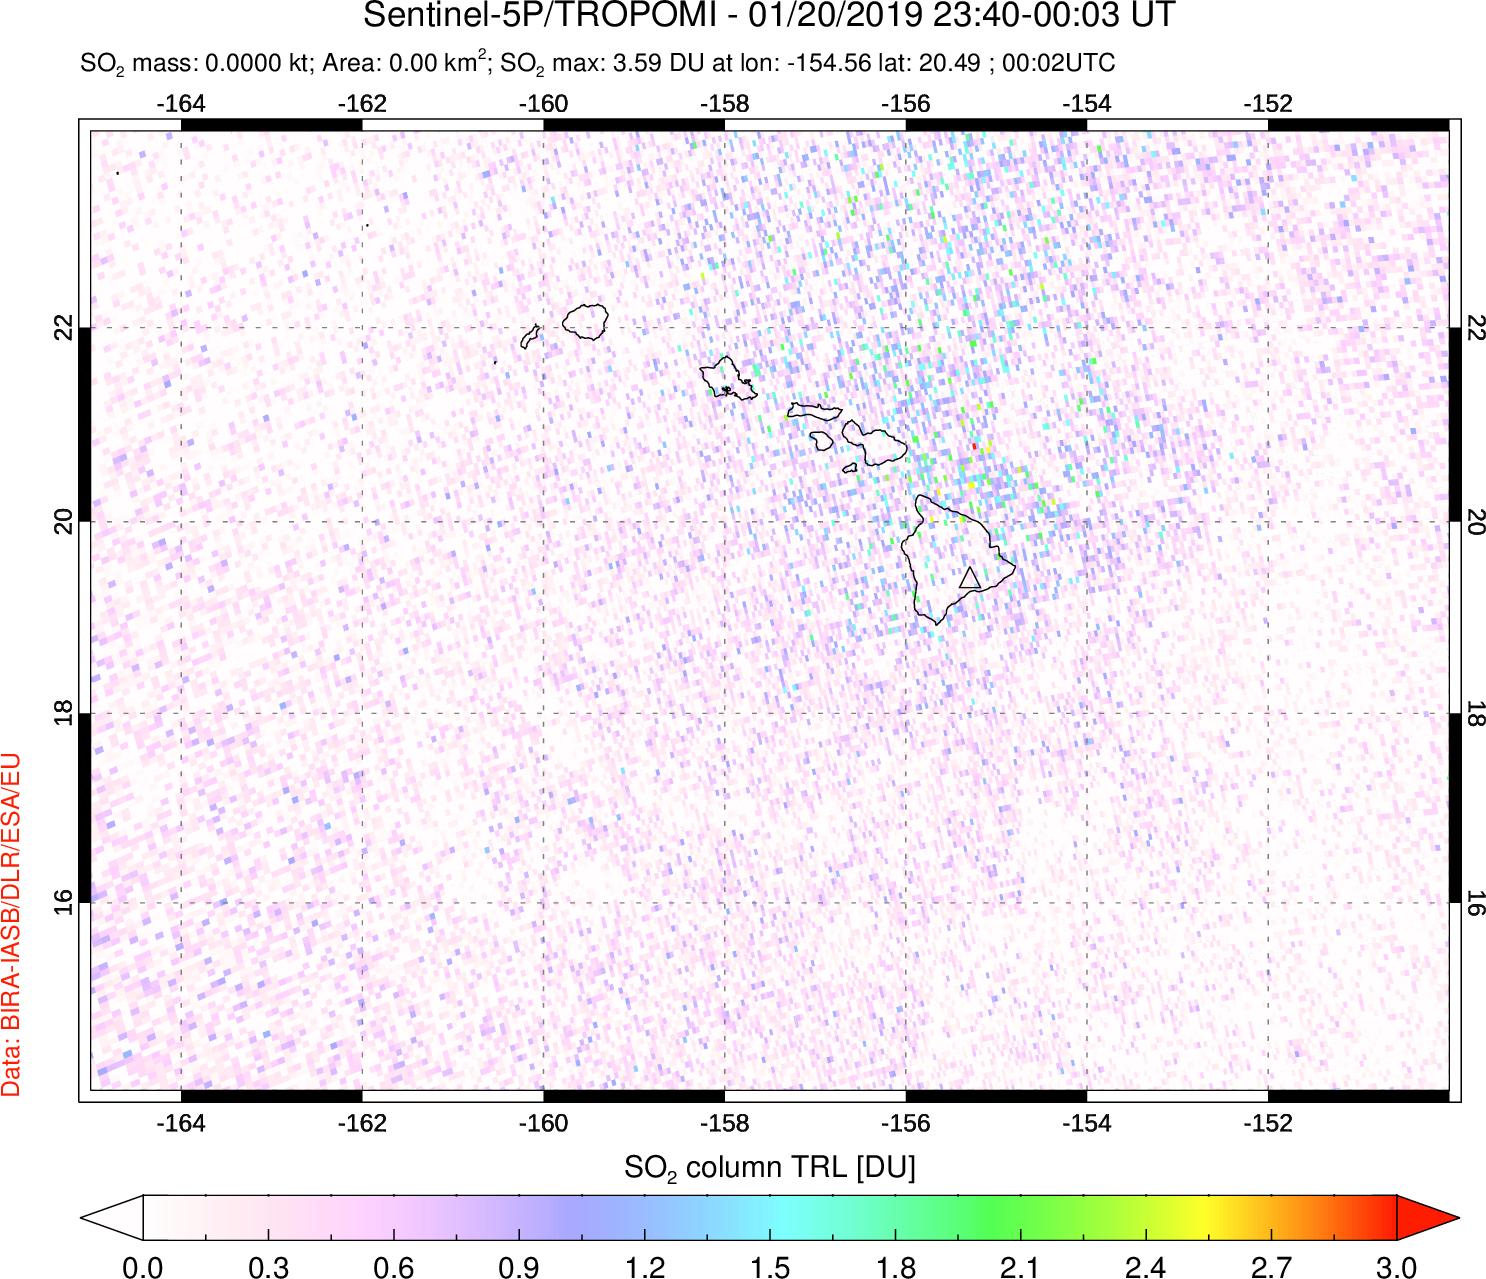 A sulfur dioxide image over Hawaii, USA on Jan 20, 2019.